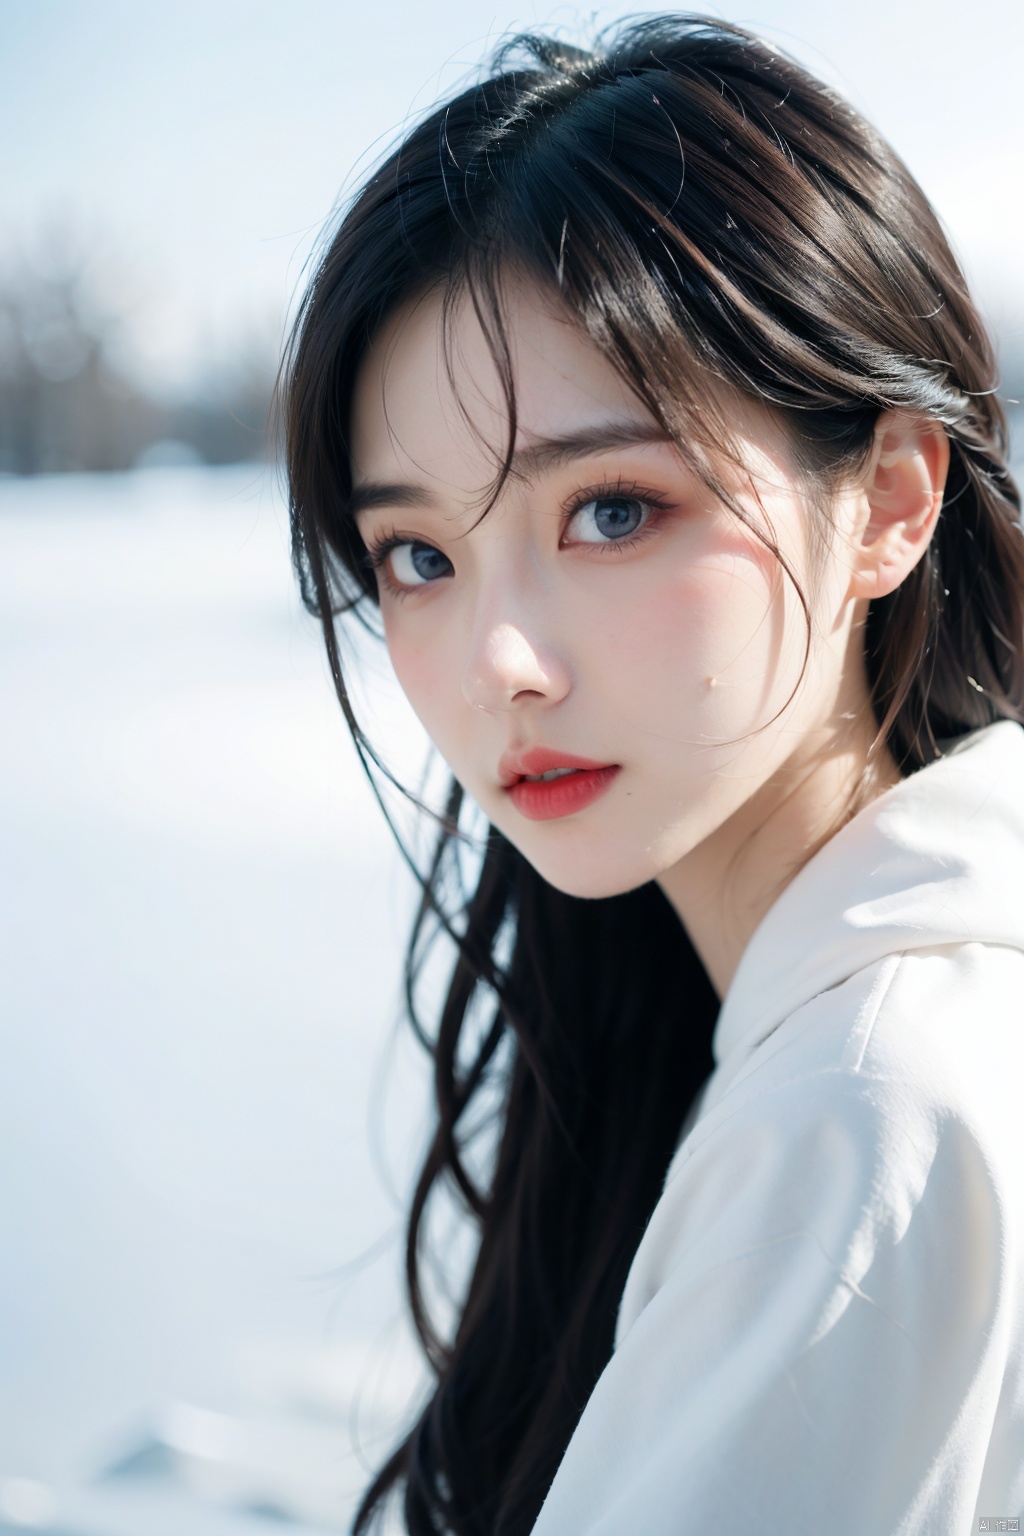  a woman,very beautiful,very pretty,20yo,skinny,detailed blue eyes,dark red lips,wind,Ice and Snow World,upper body shot,:)